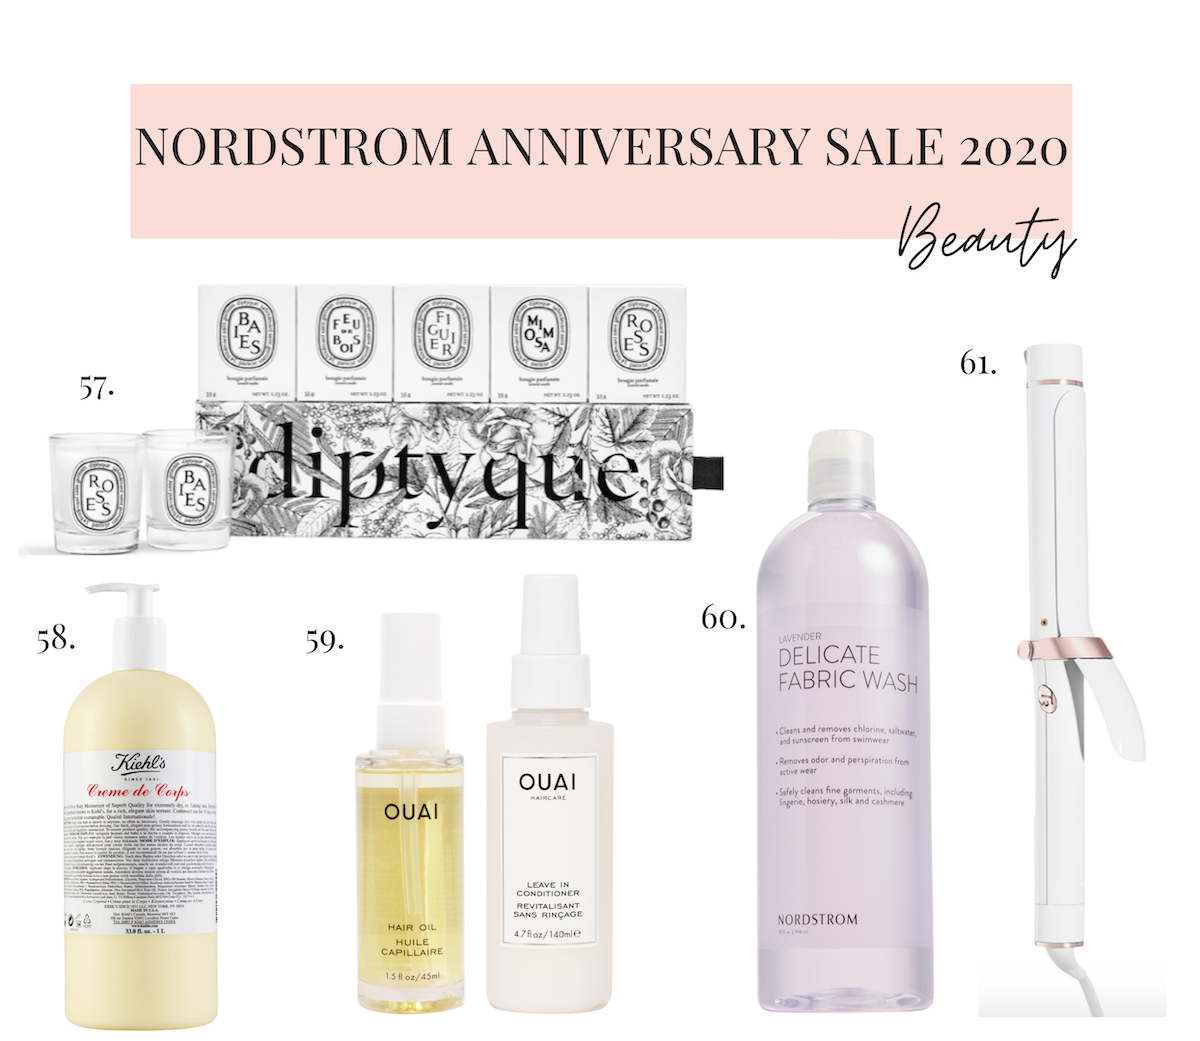 Nordstrom anniversary sale 2020 beauty picks